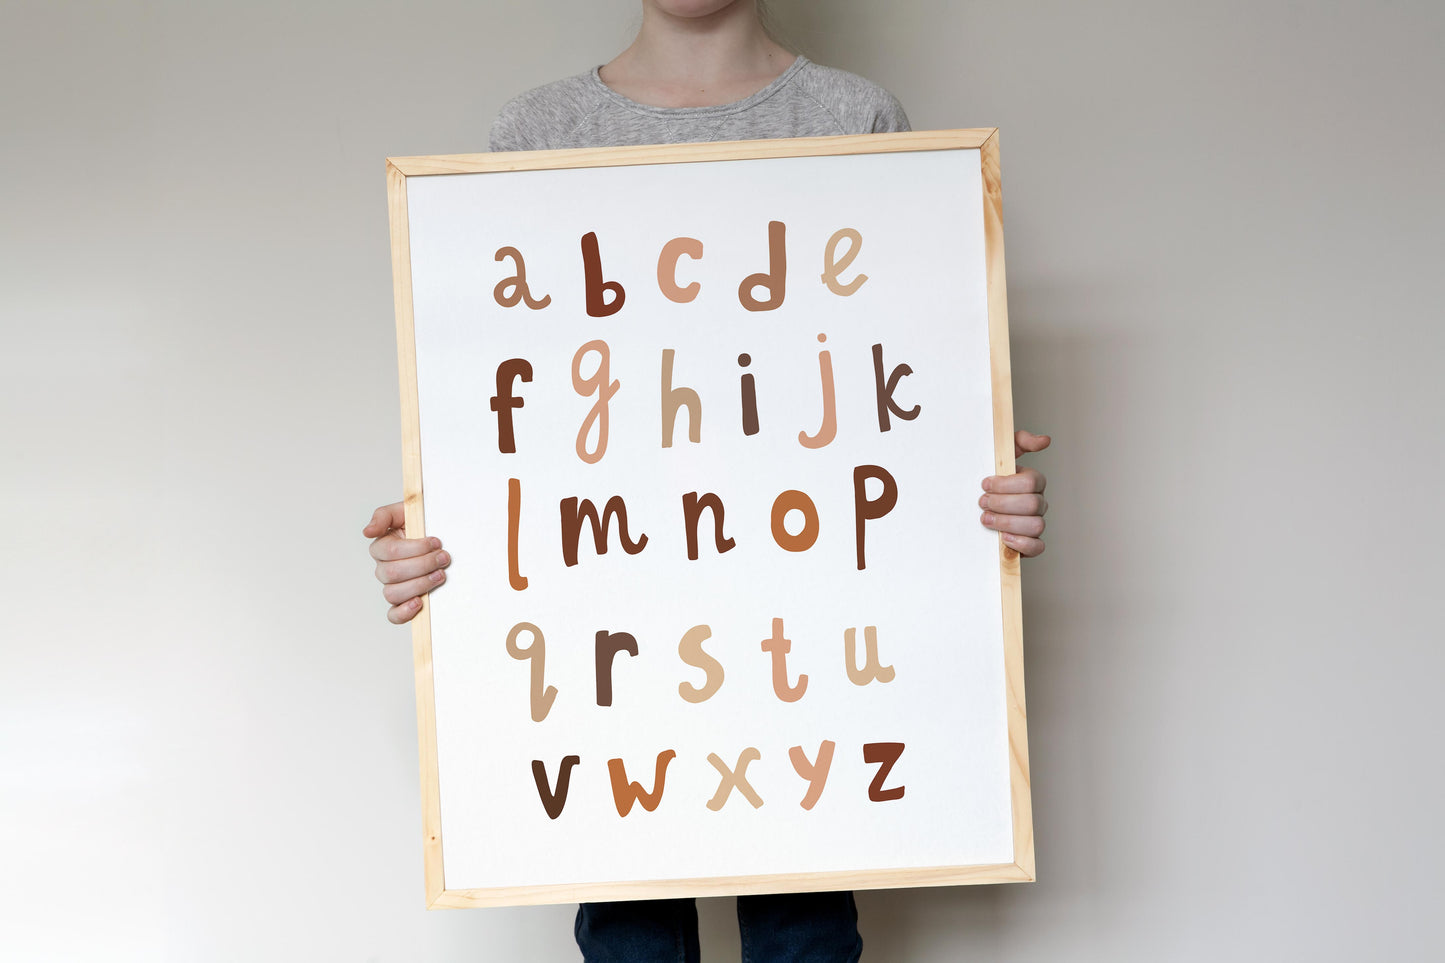 Modern Alphabet and Numbers Wall Art, Educational Nursery Prints set of 3